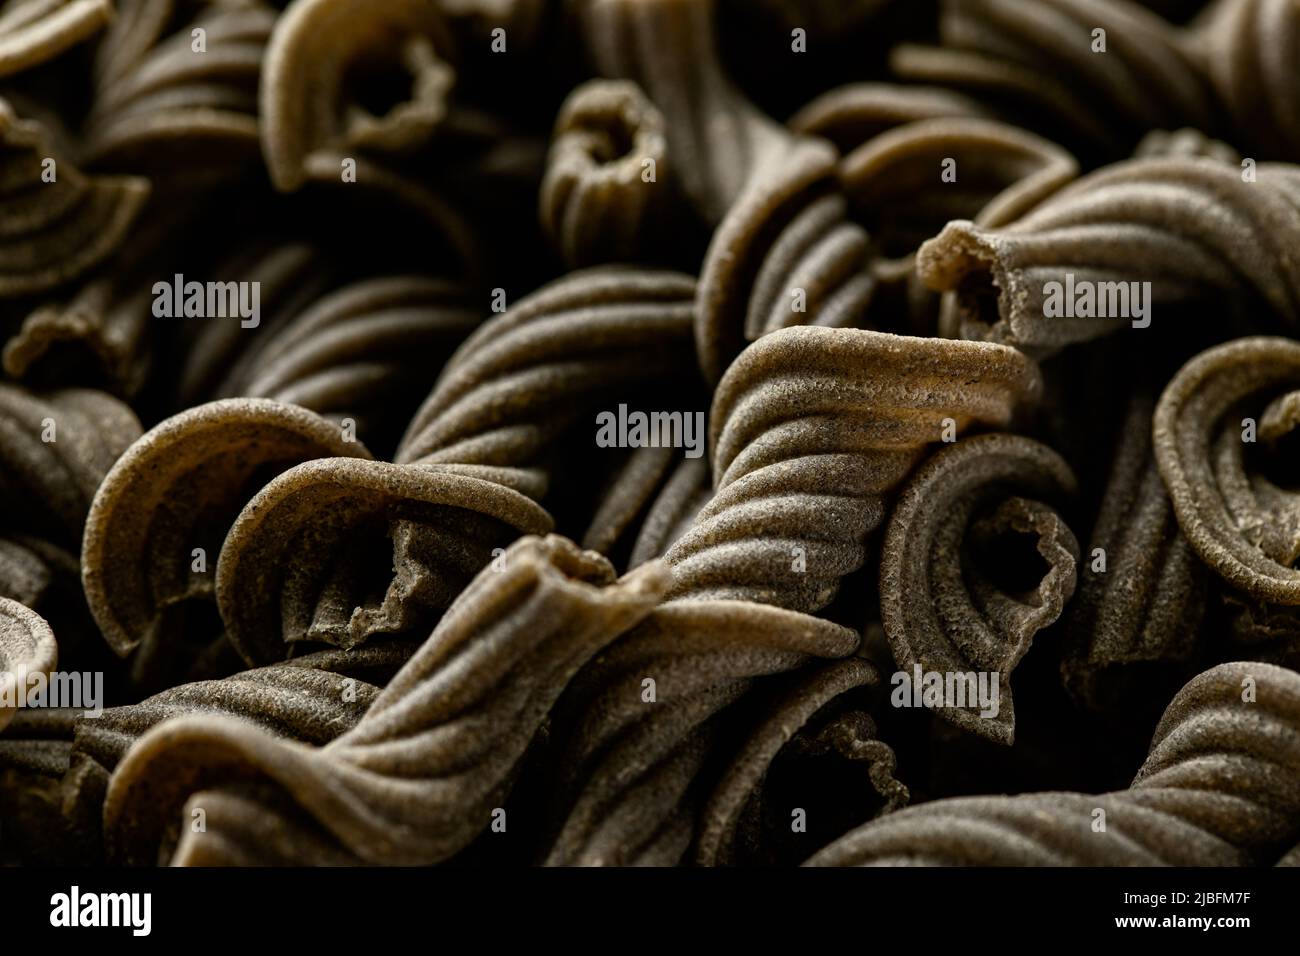 Close-up view of raw basil flavored sedanini pasta Stock Photo